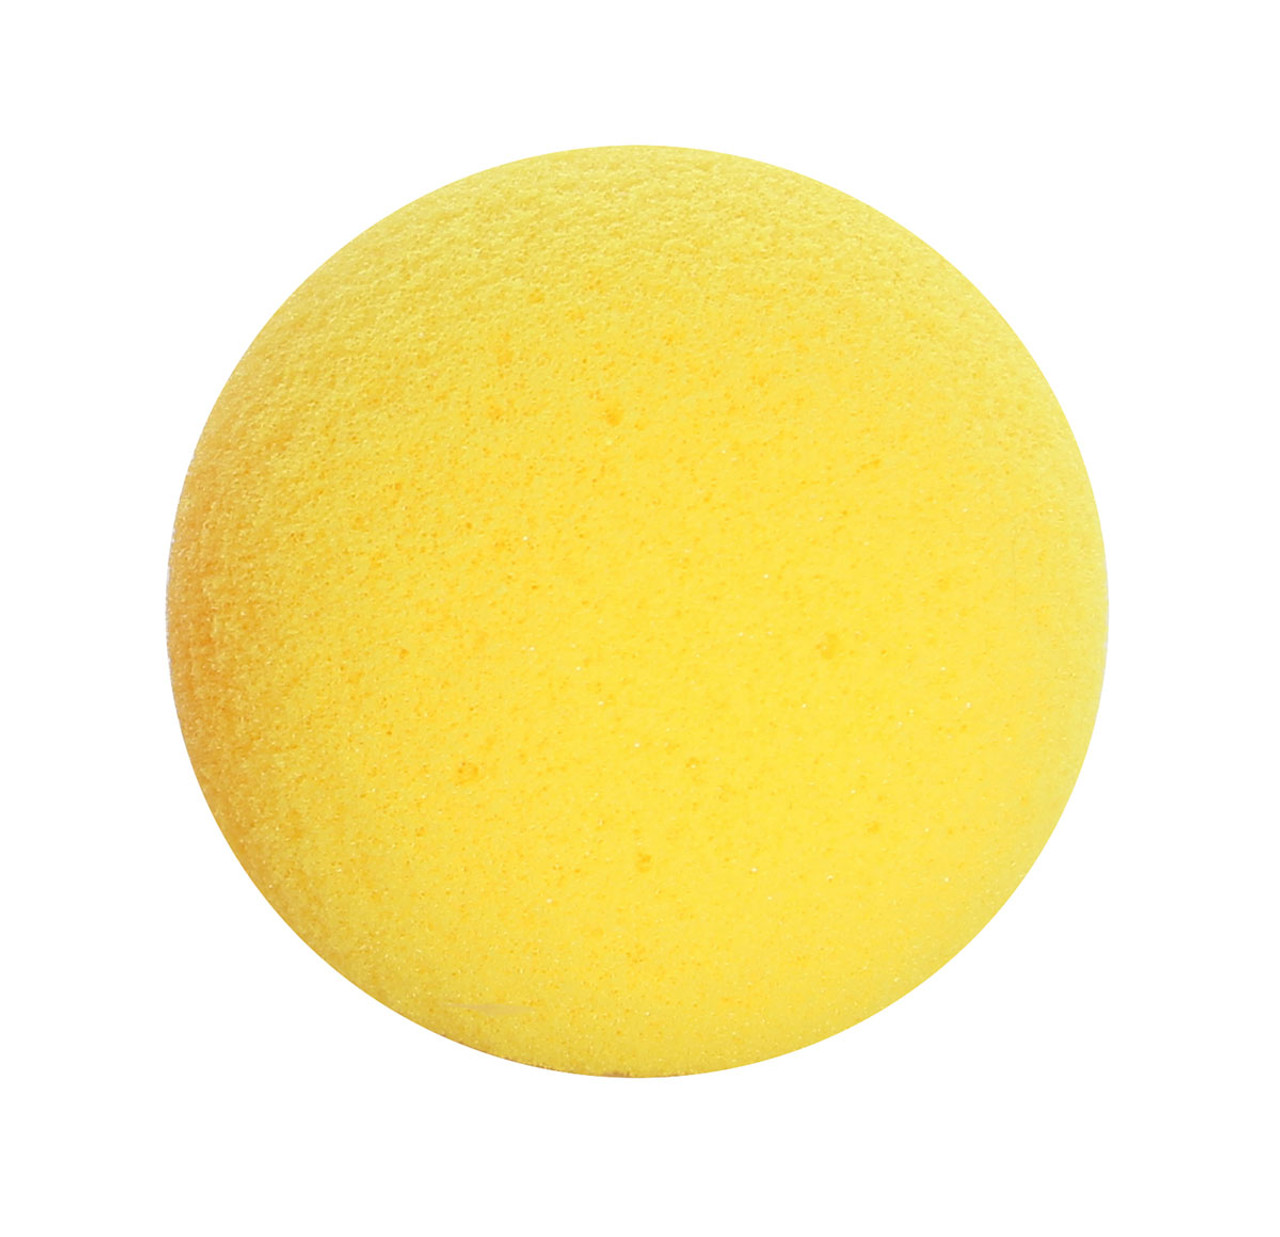 CanDo¨ Memory Foam Squeeze Ball - 2.5" diameter - Yellow, x-easy, dozen